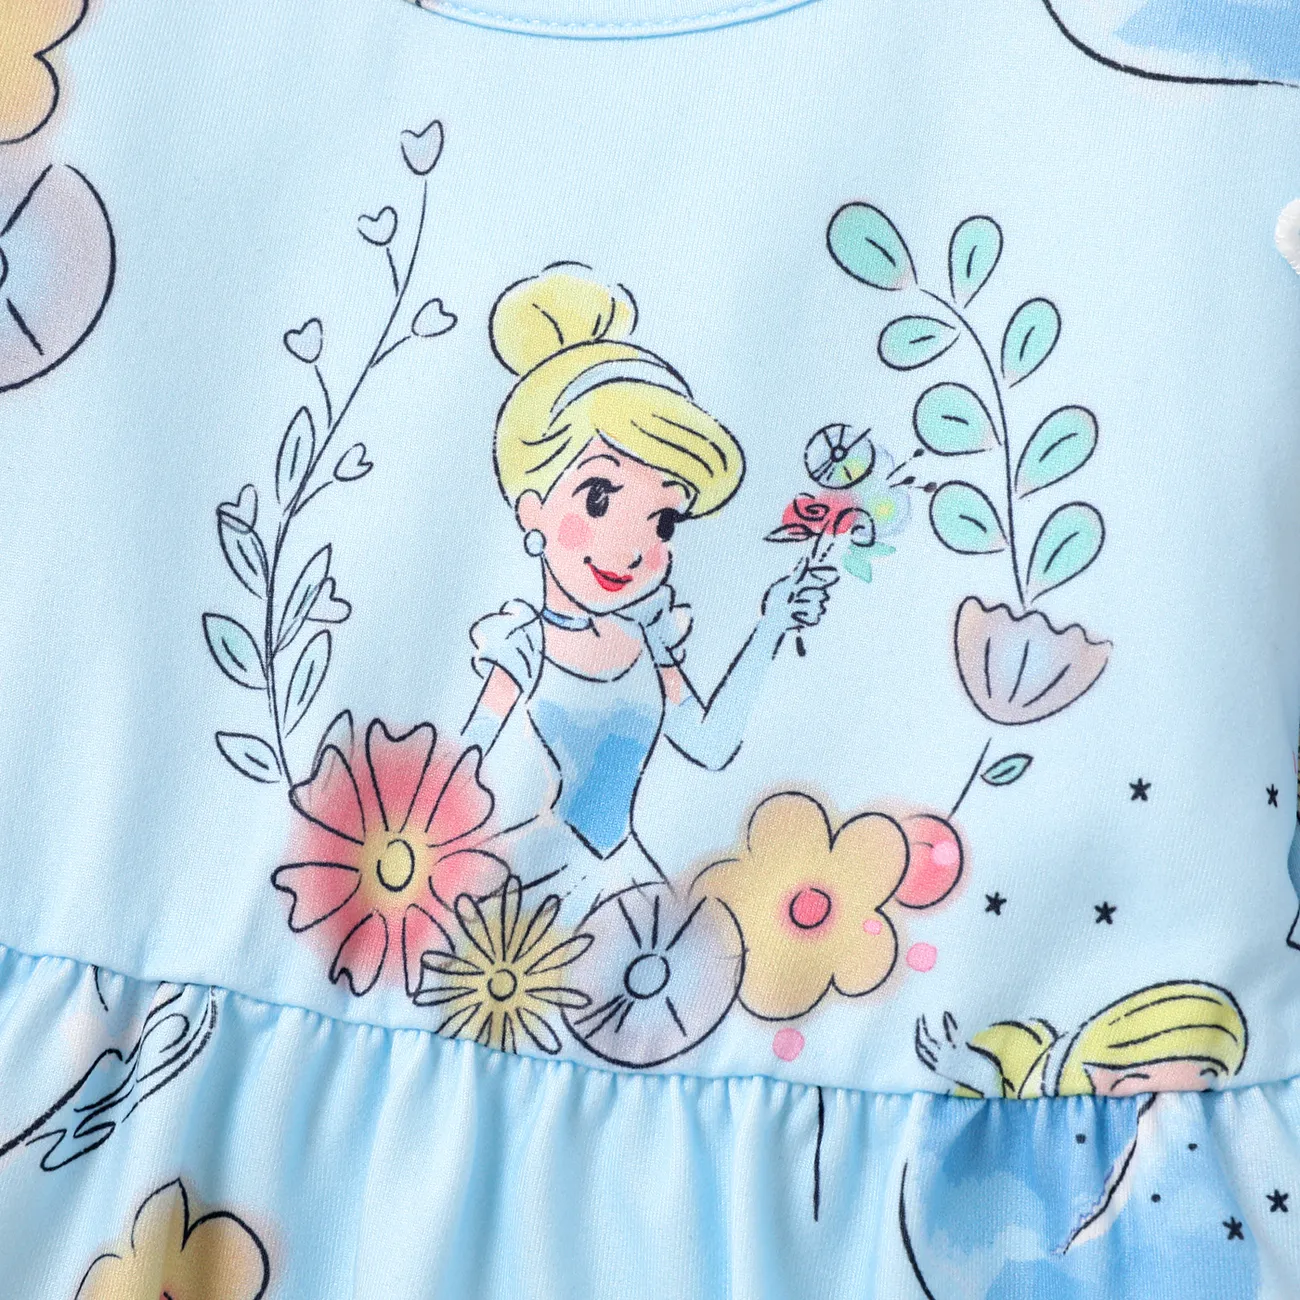 Disney Princess Baby Girl Floral & Character Print Ruffled Long-sleeve Dress  Blue big image 1